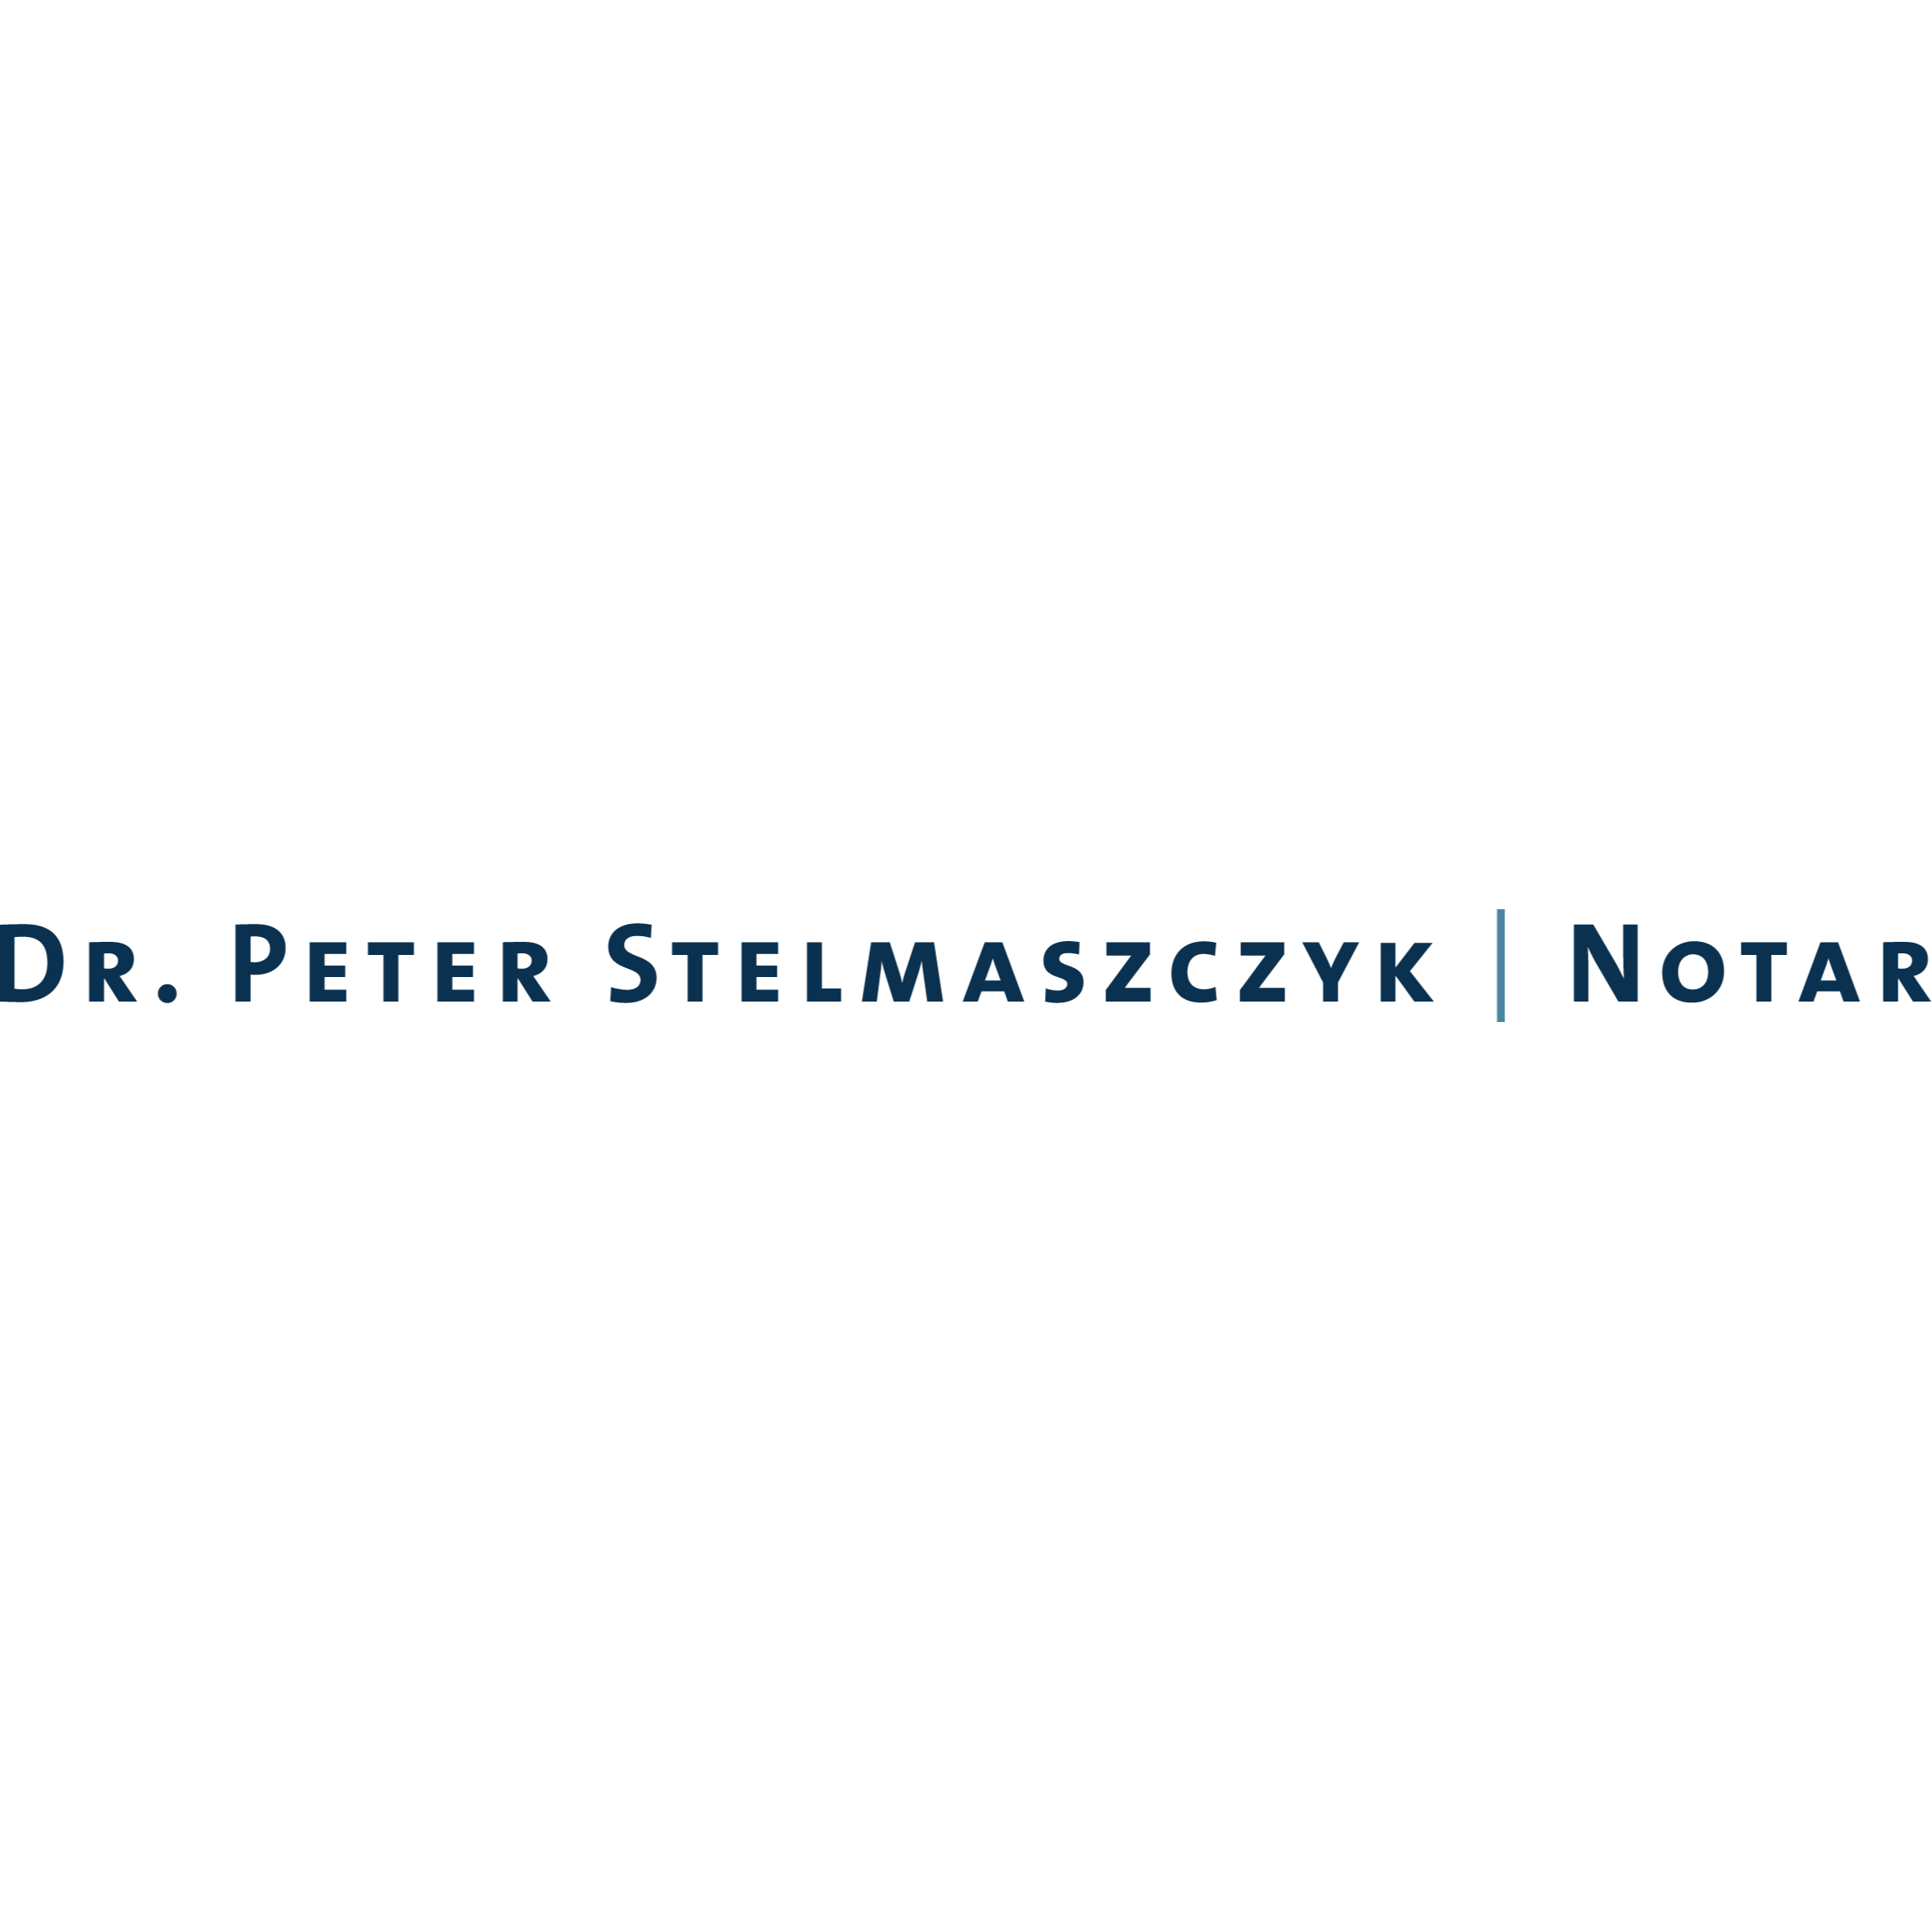 Notar Dr. Peter Stelmaszczyk Logo